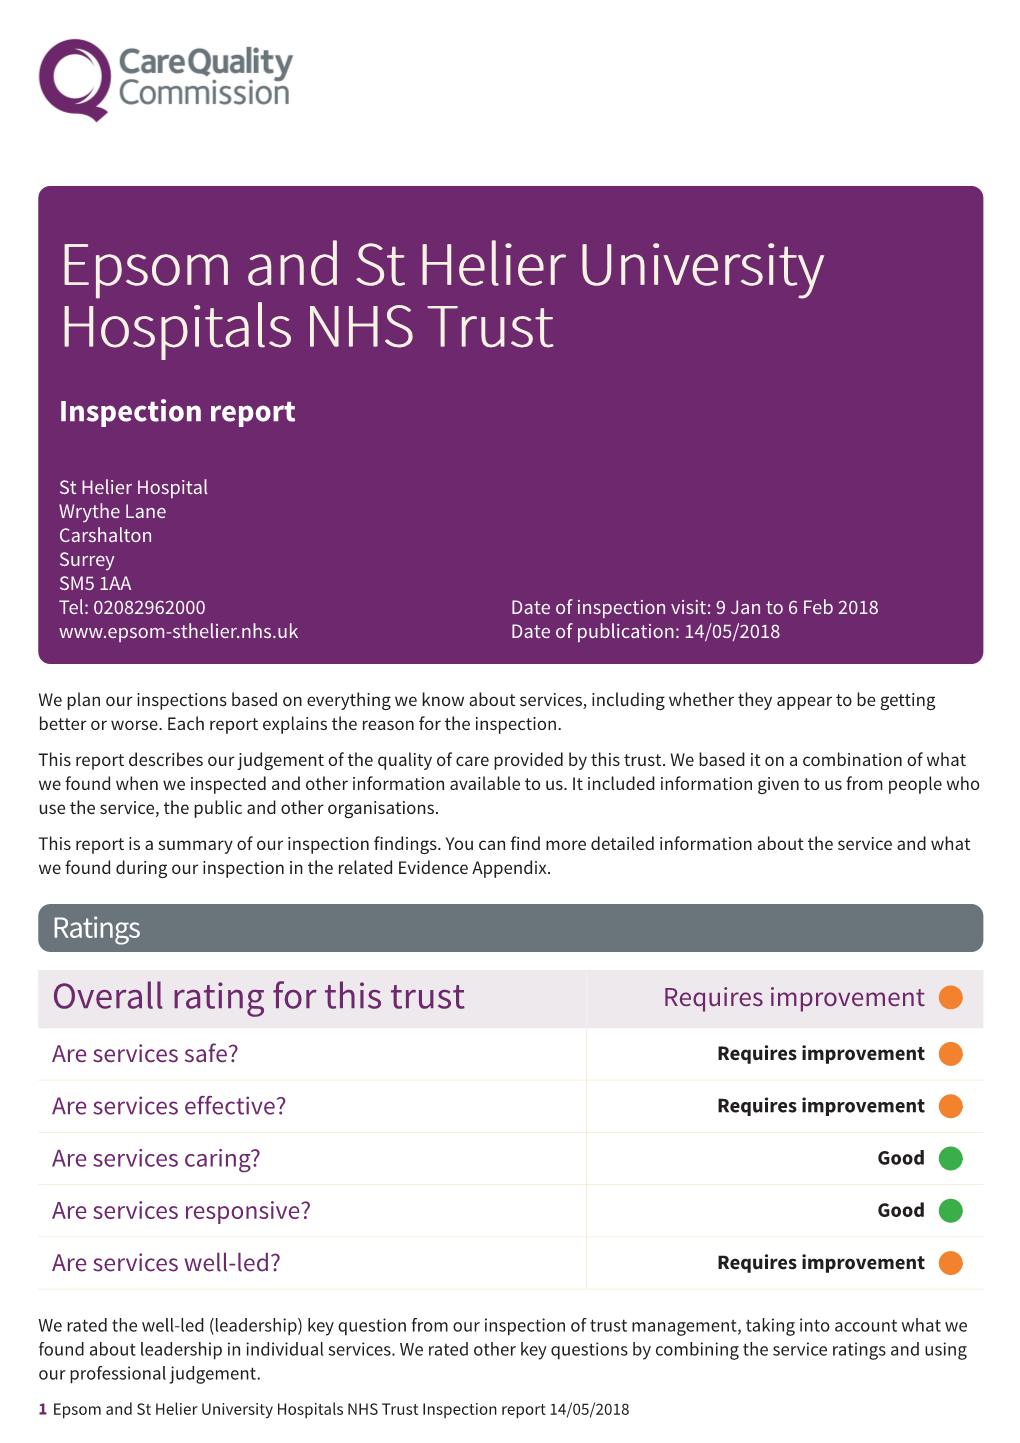 RVR Epsom and St Helier University Hospitals NHS Trust